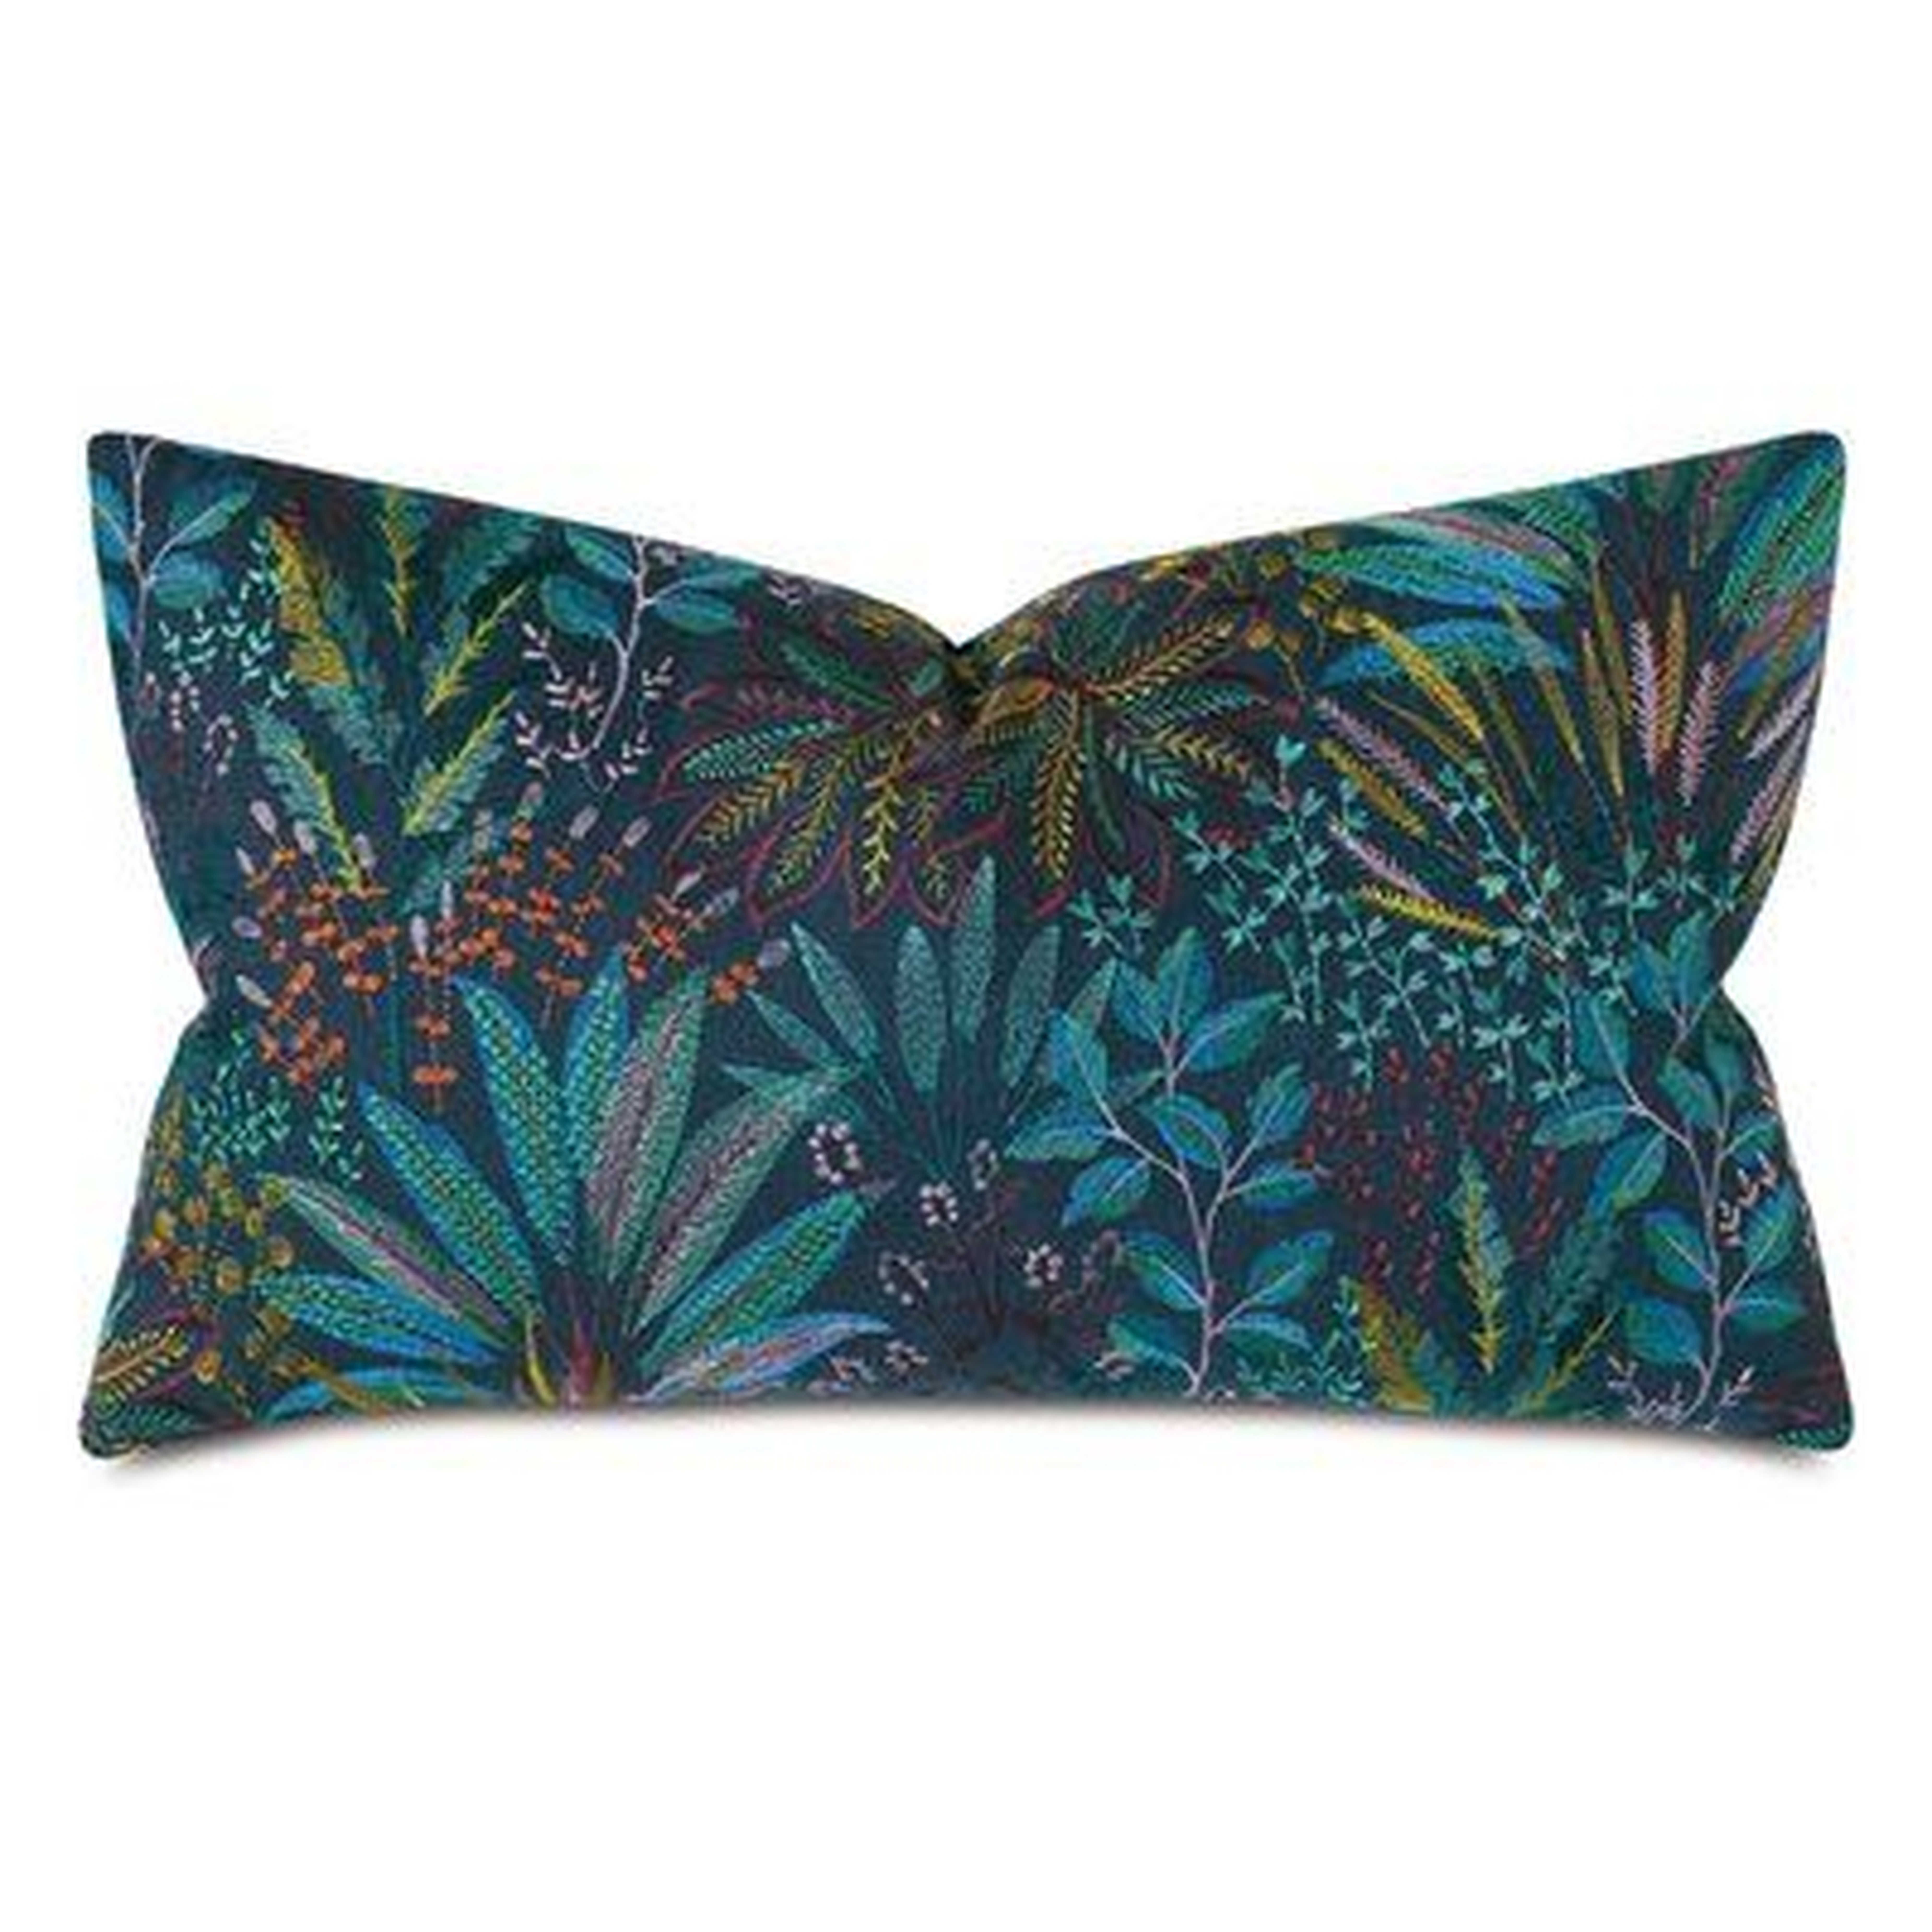 Eastern Accents Cummings Decorative Pillow Floral Rectangular Pillow Cover & Insert - Perigold